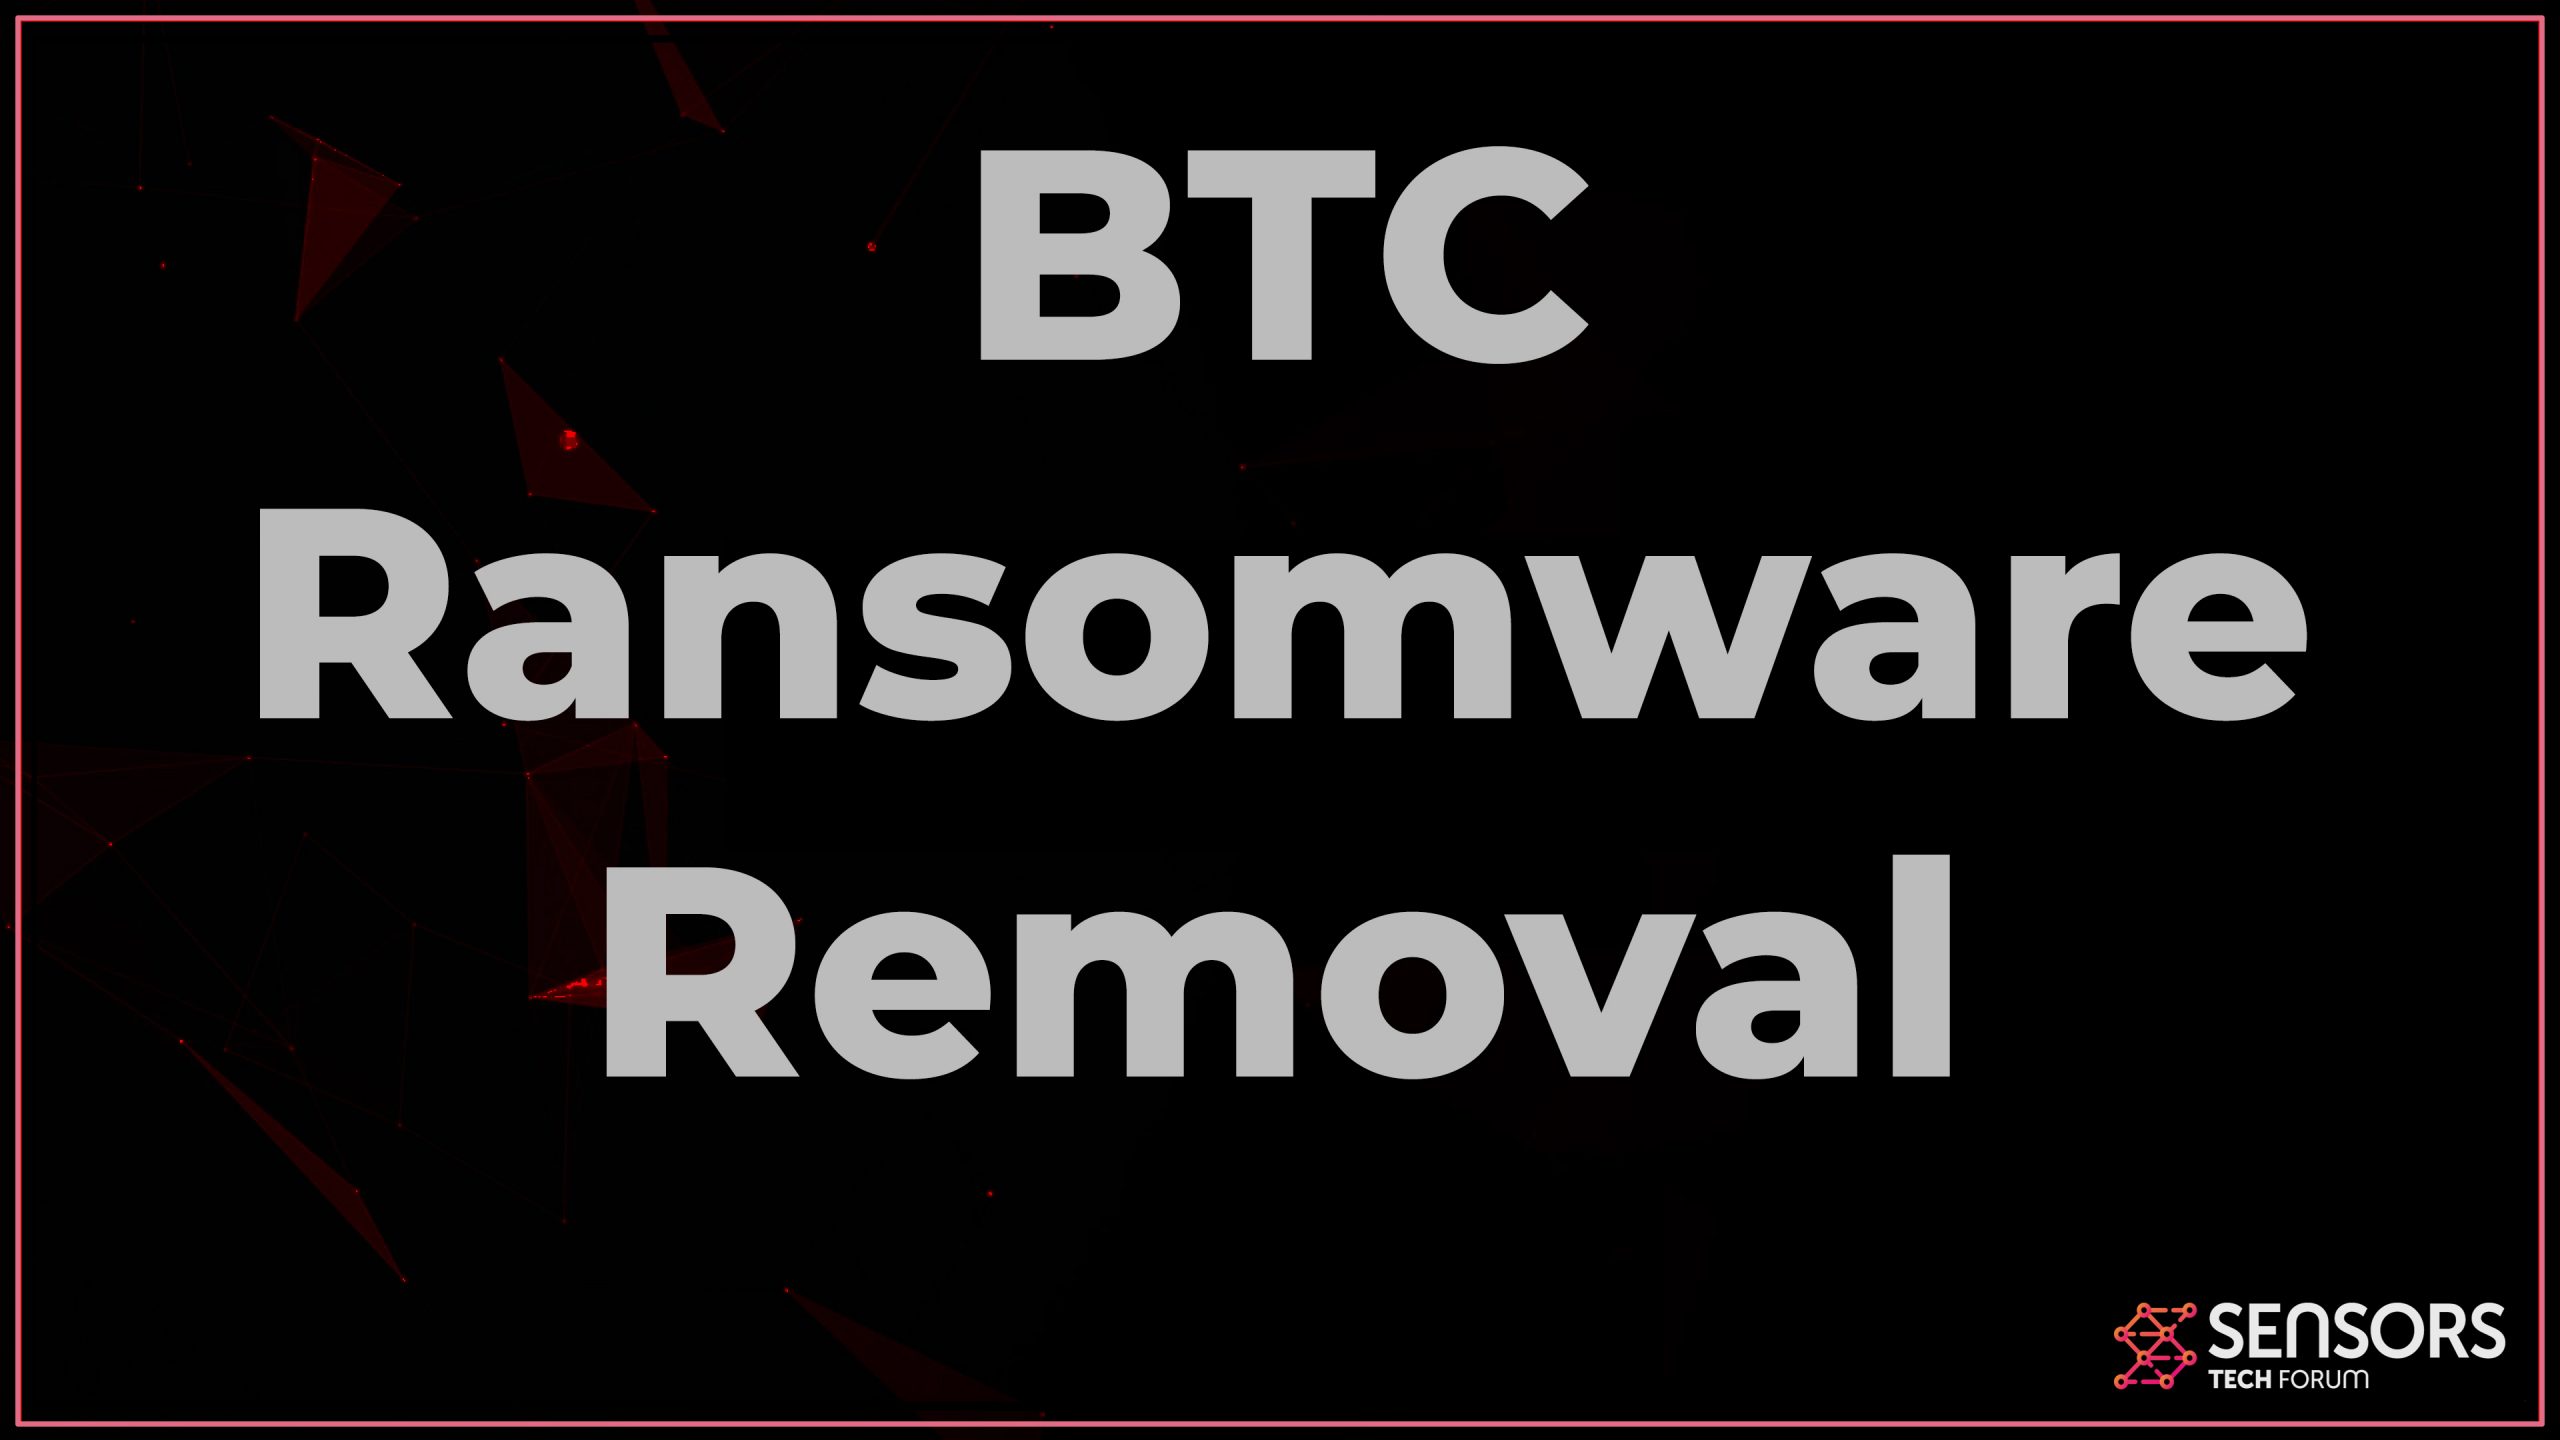 btc removal concepts